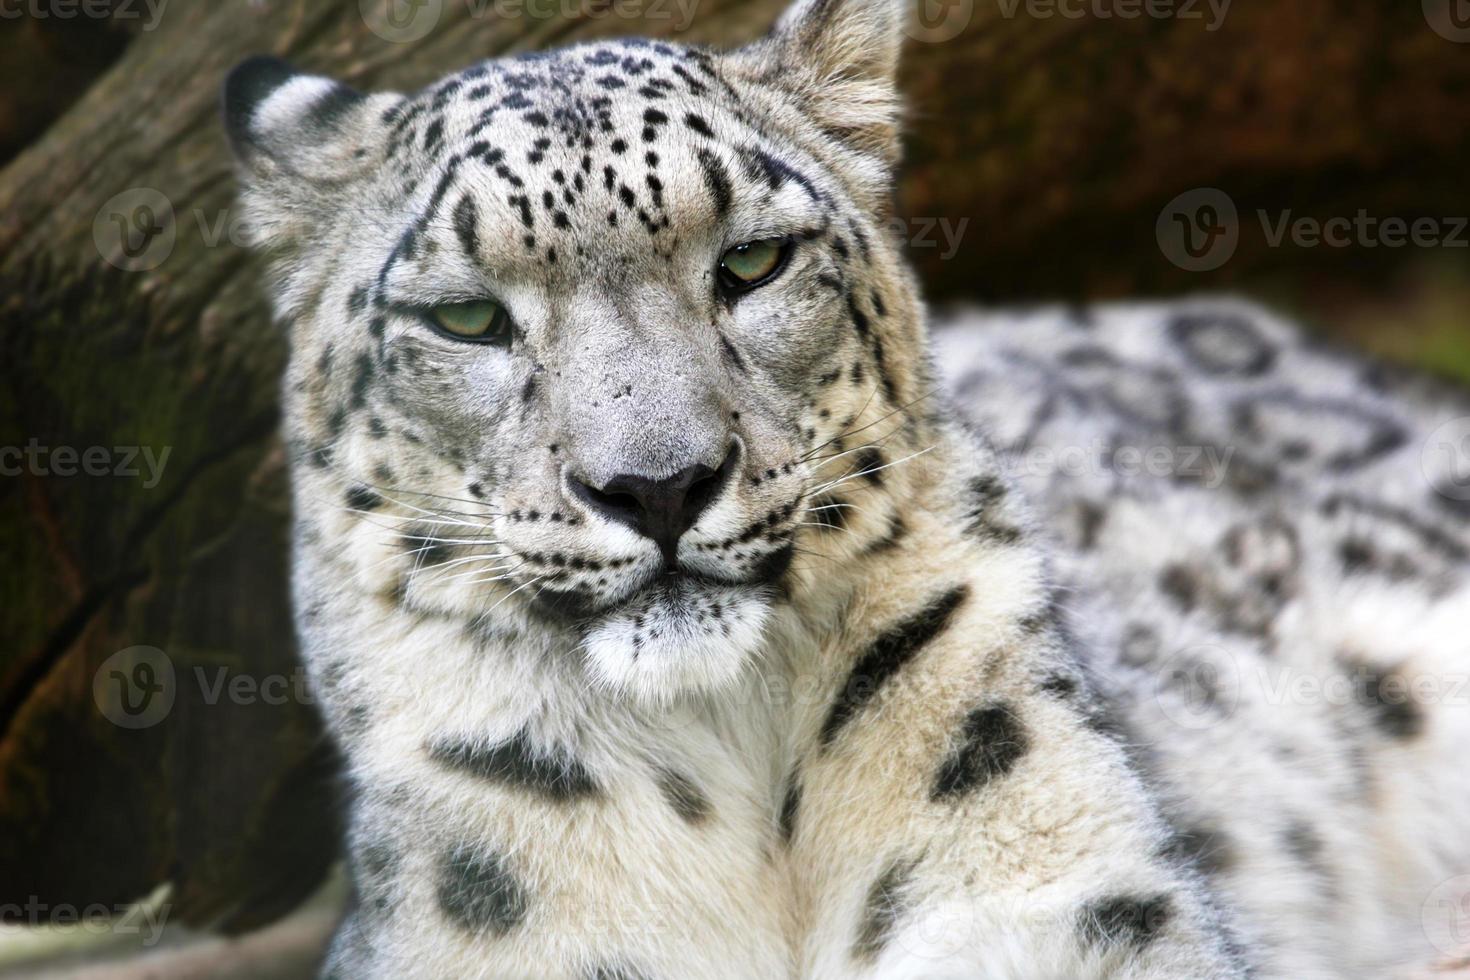 Snow Leopard photo